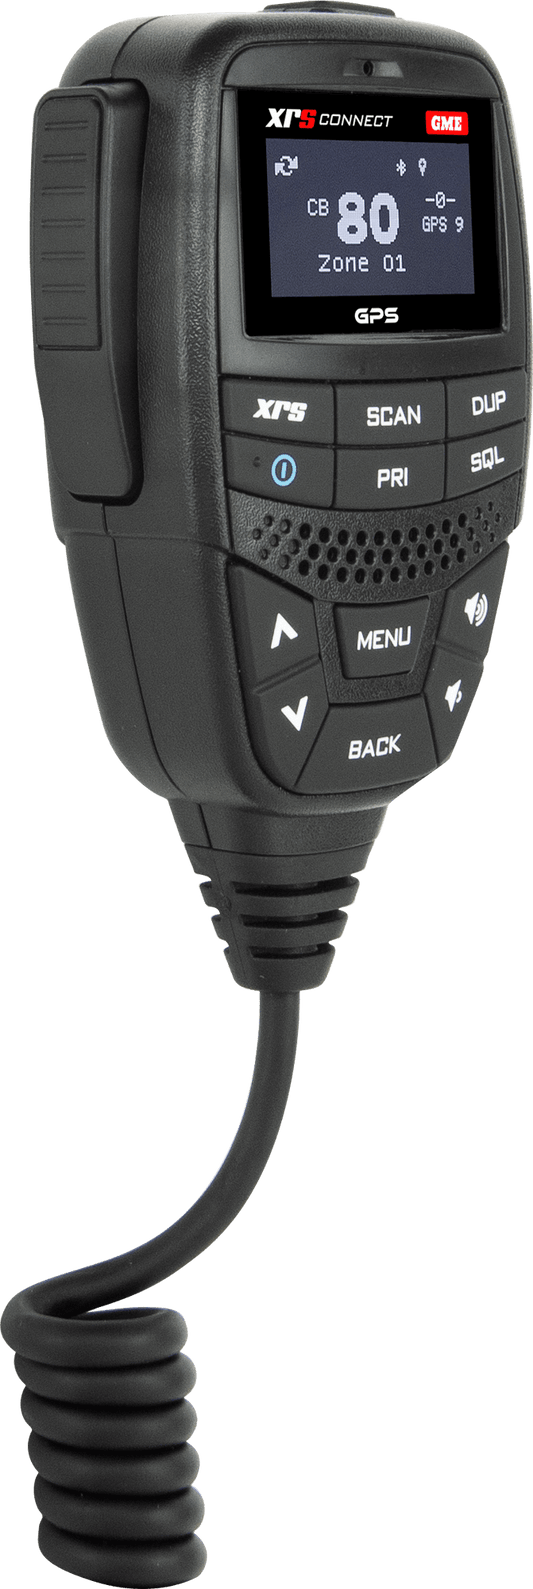 MC668B Professional Grade OLED Speaker Microphone with GPS